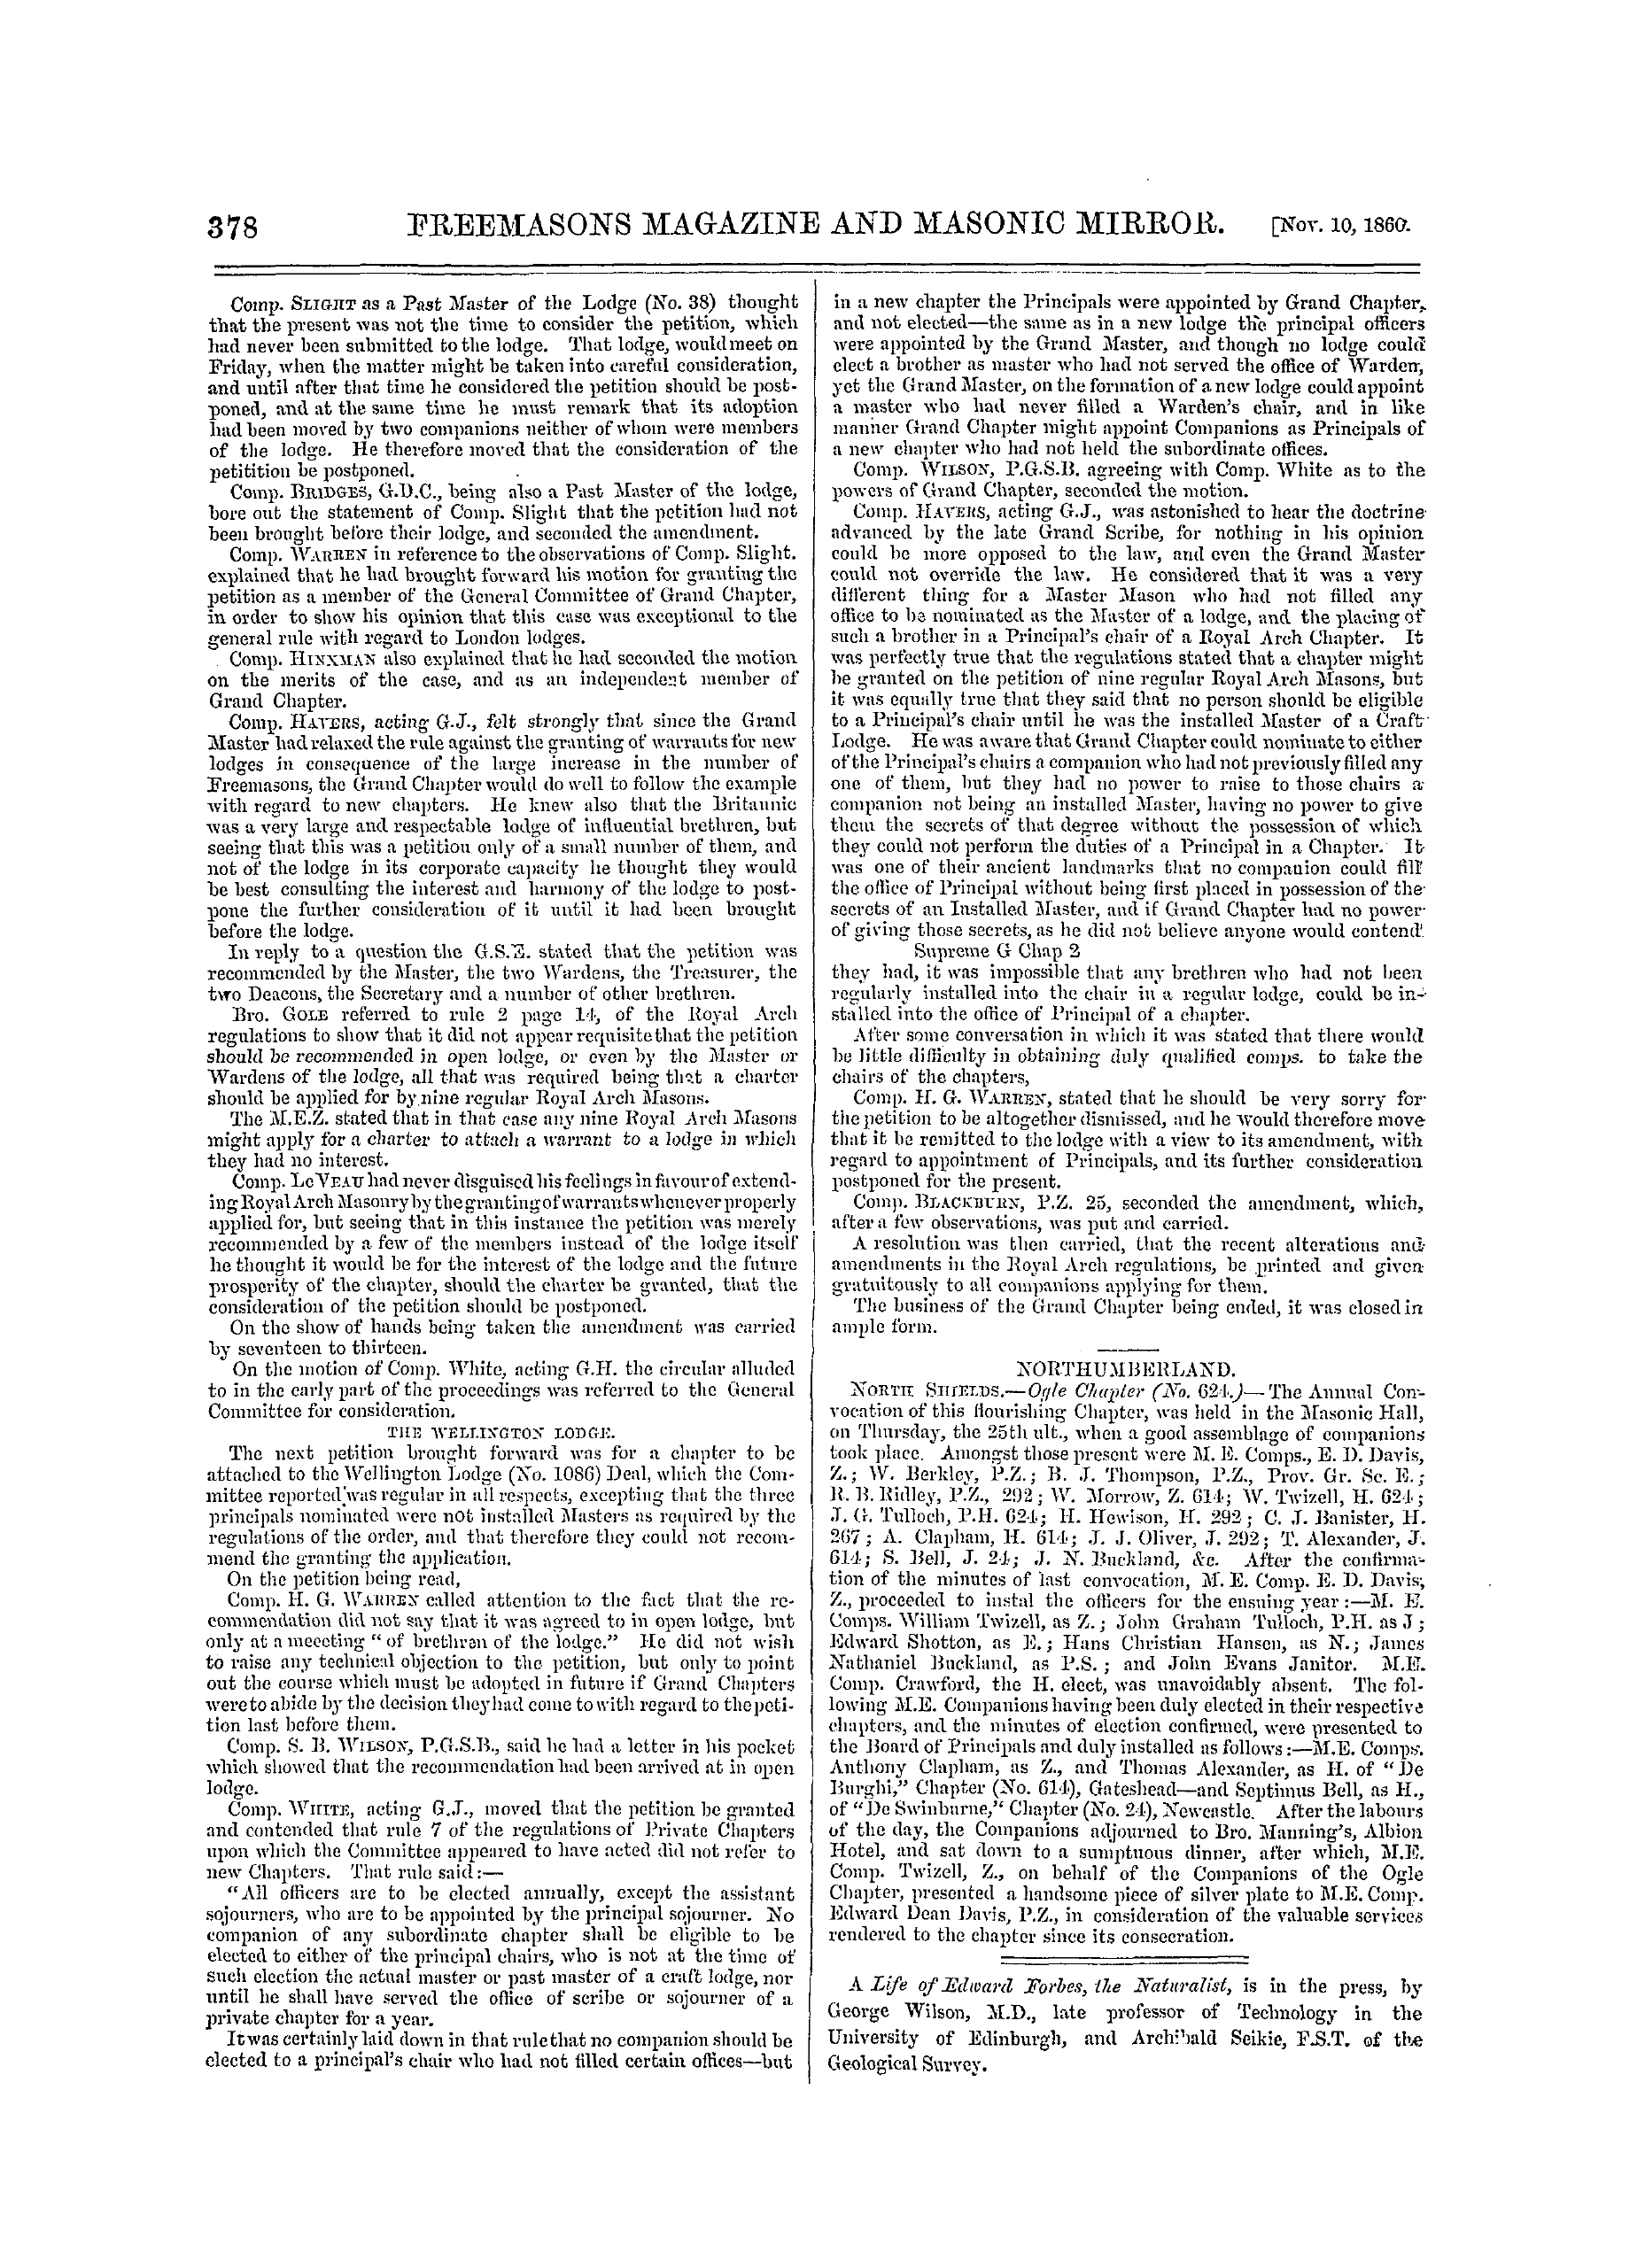 The Freemasons' Monthly Magazine: 1860-11-10 - Royal Arch.